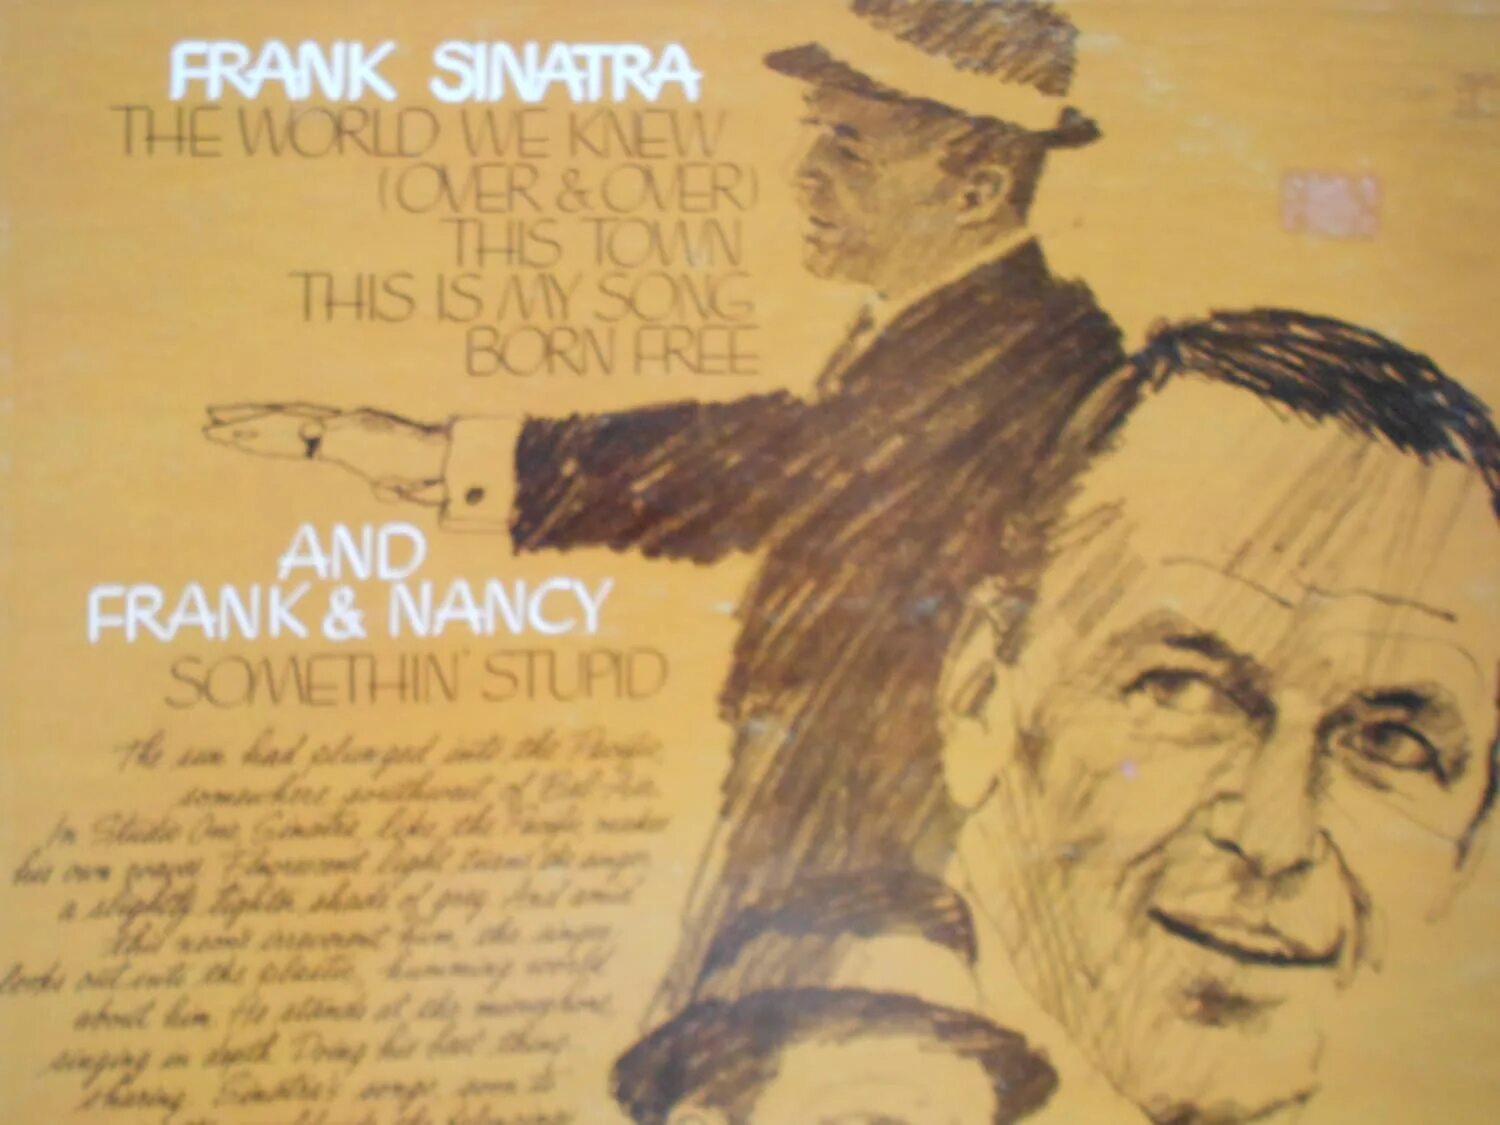 Frank Sinatra - the World we knew. Frank Sinatra the World we knew пластинка. The World we knew Frank Sinatra обложка. Frank Sinatra - the World we knew (1967) Ноты. Sinatra the world we know